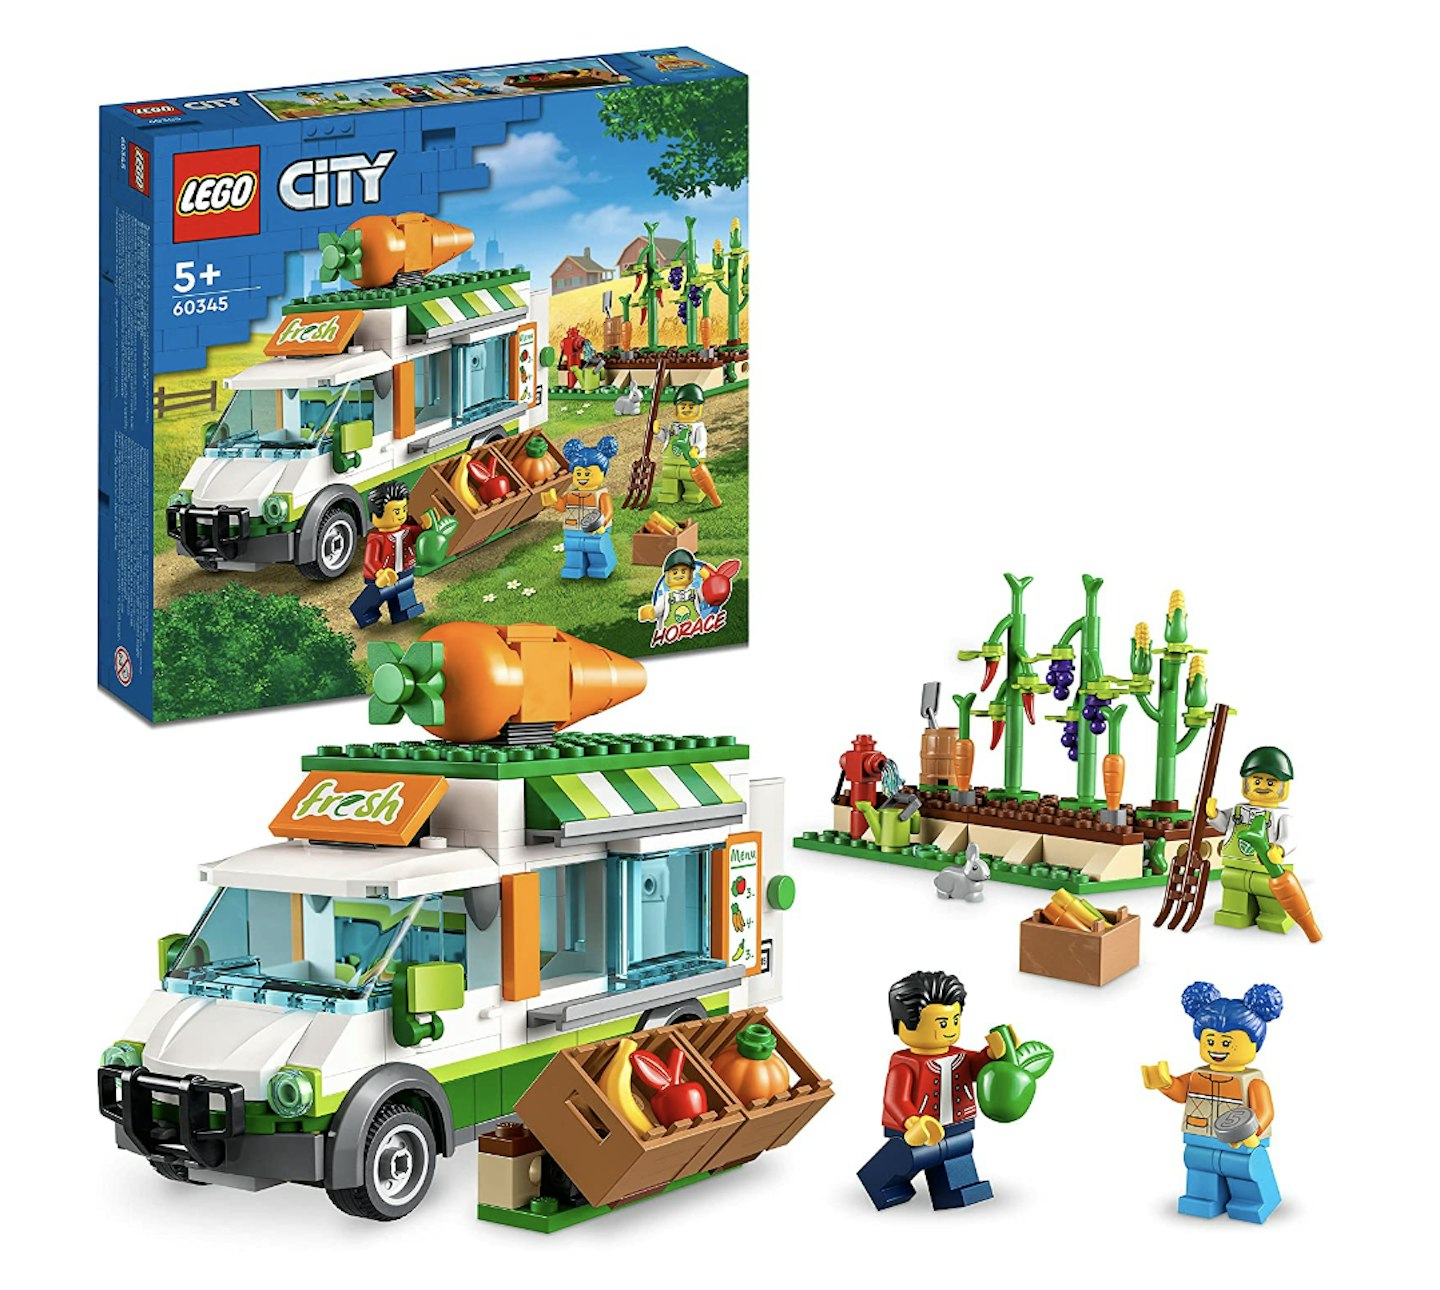 LEGO 60345 City Farmers Market